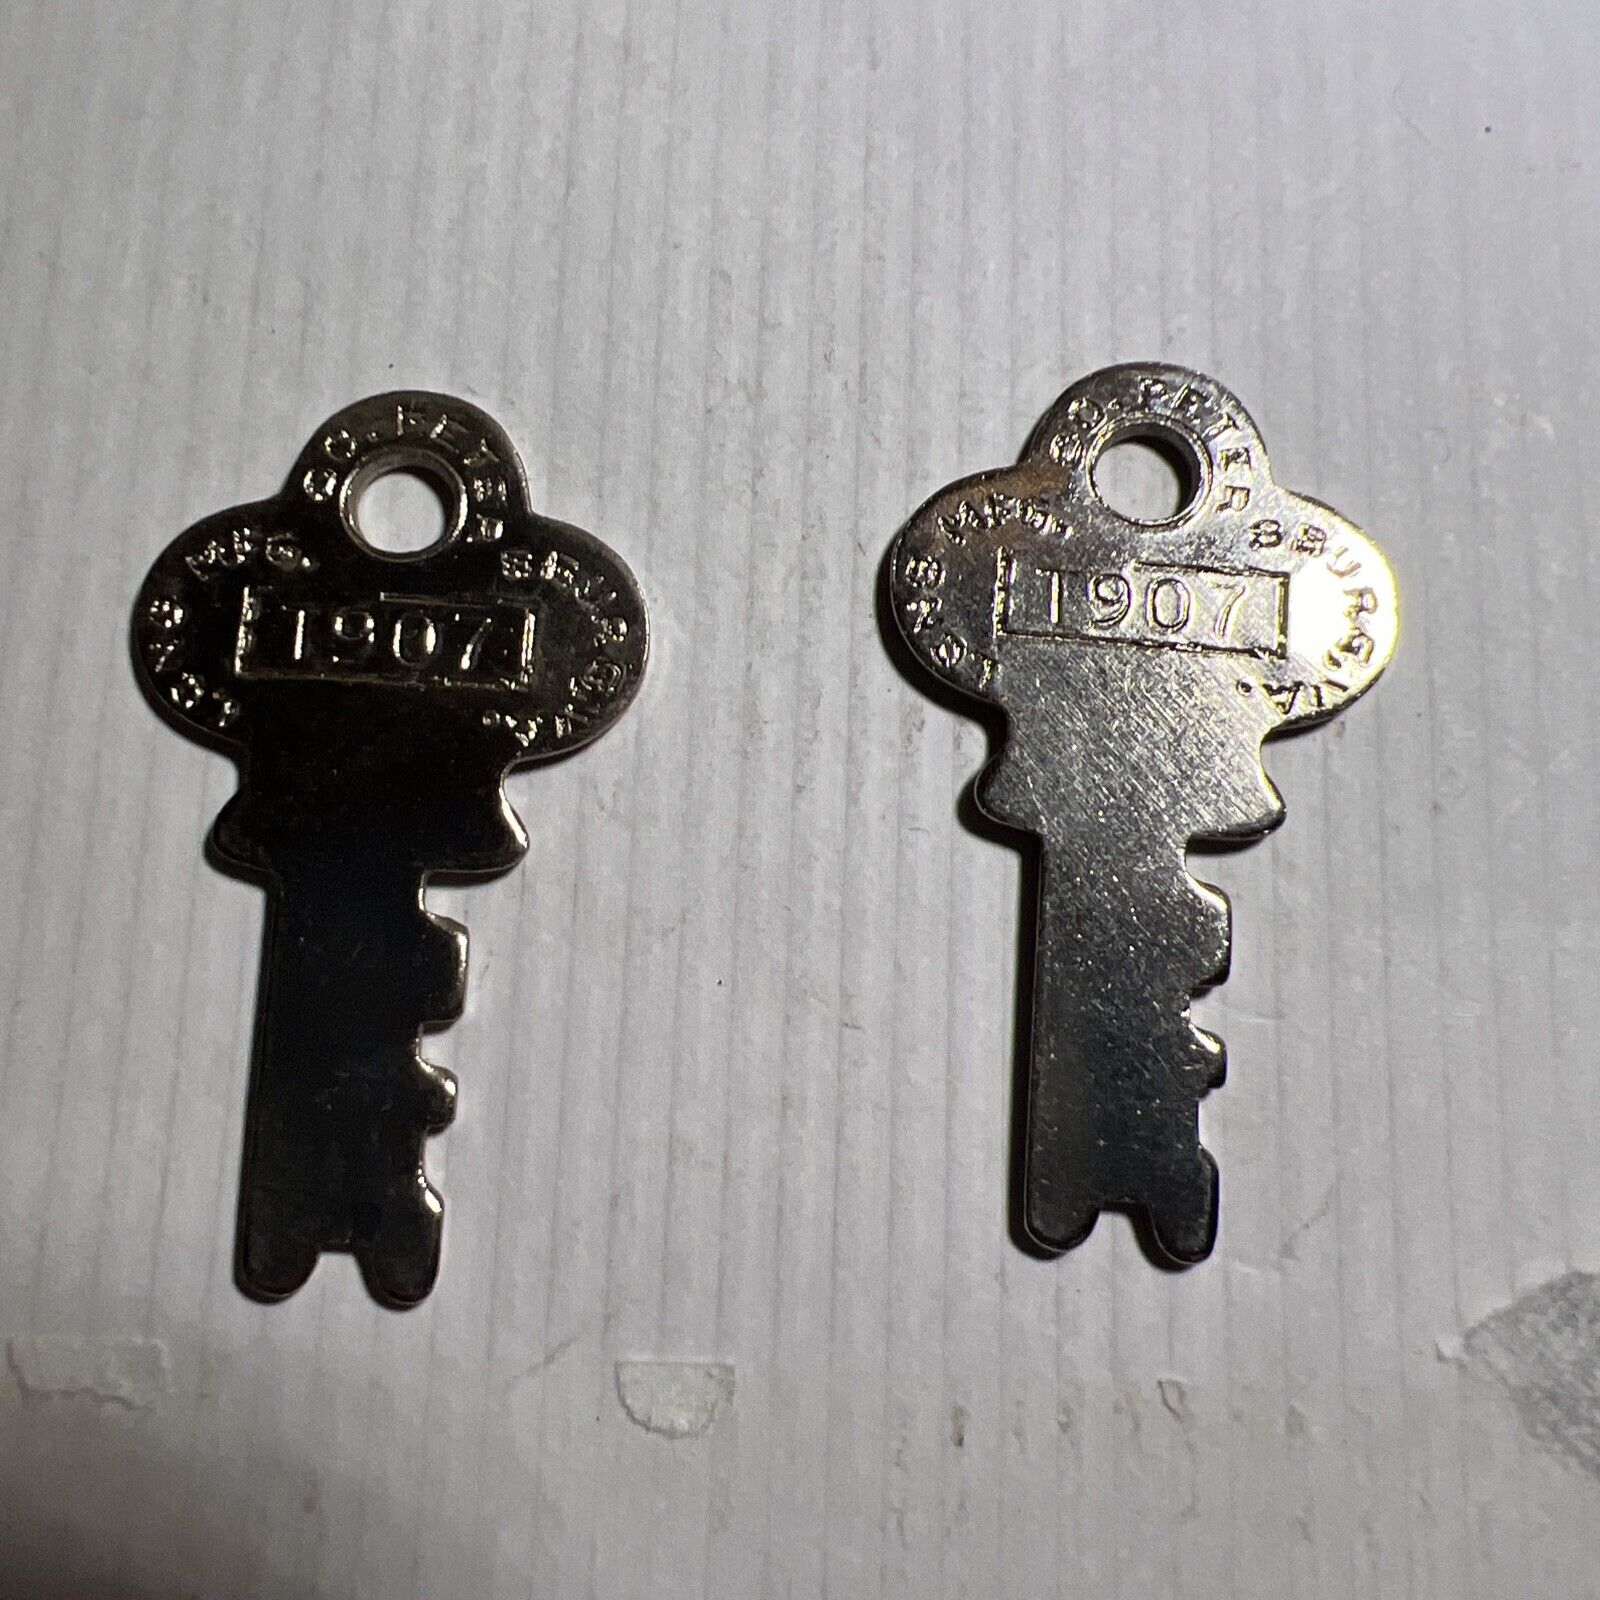 TWO Vintage Long Lock T907 Replacement Trunk Footlocker Keys